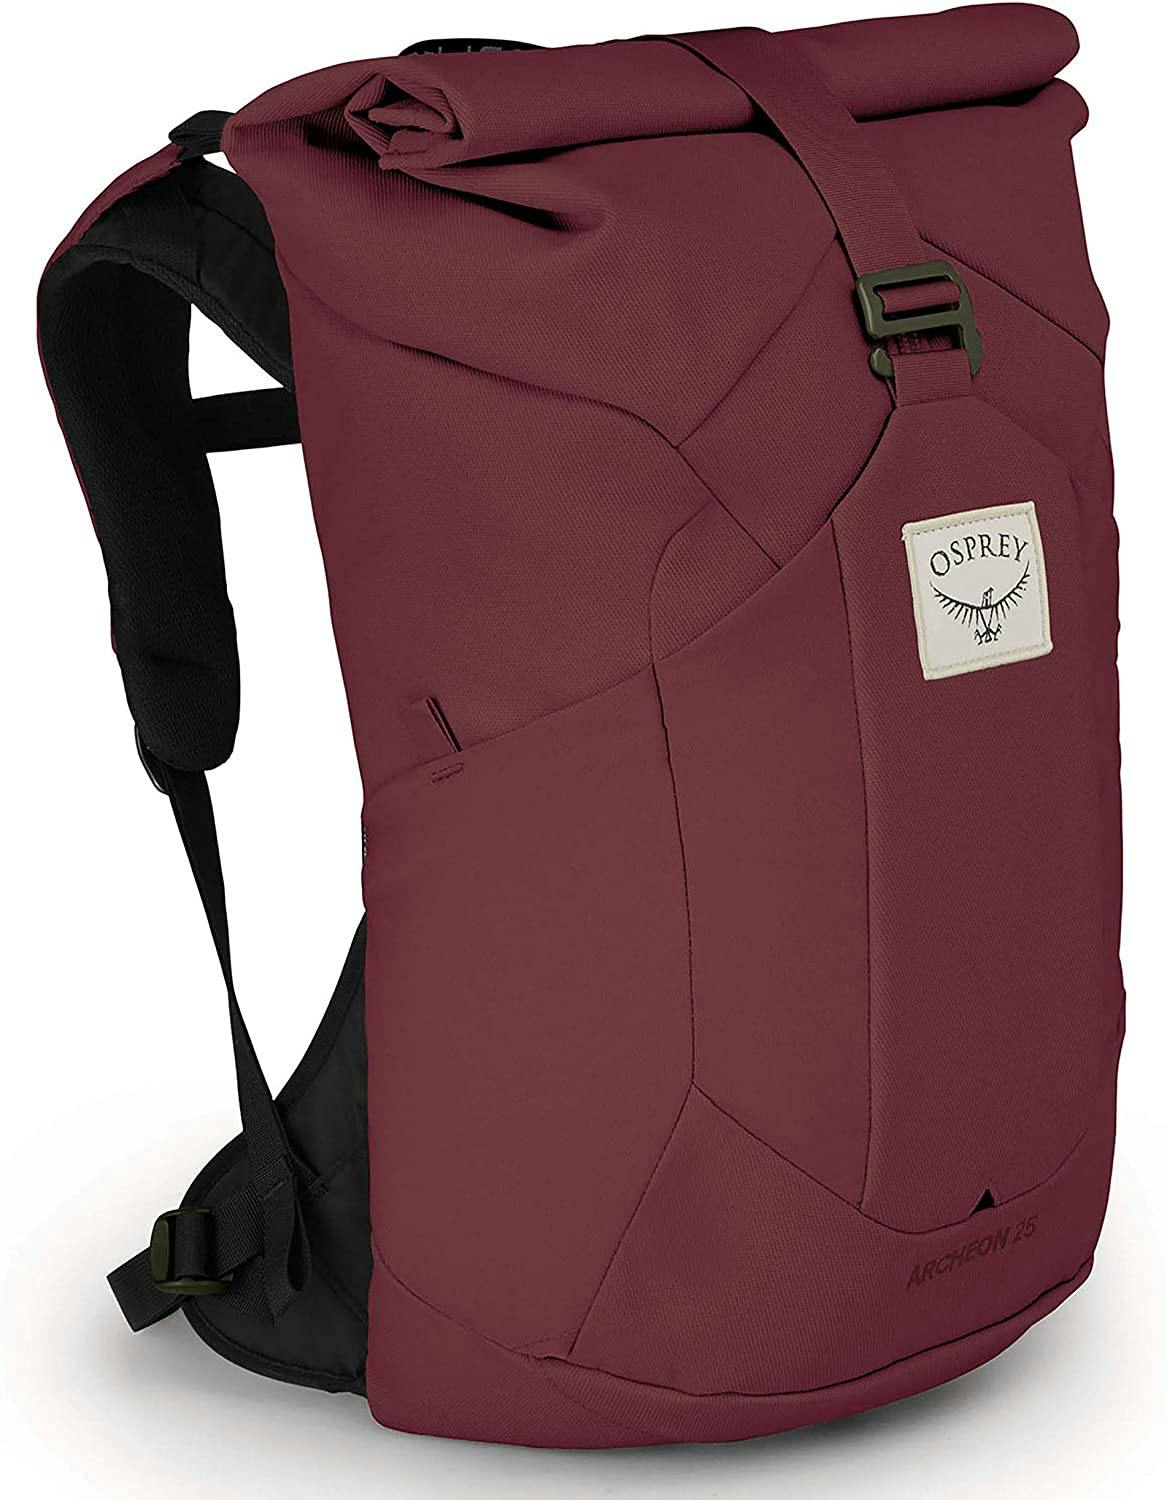 Osprey Archeon 25 Backpack- Women's